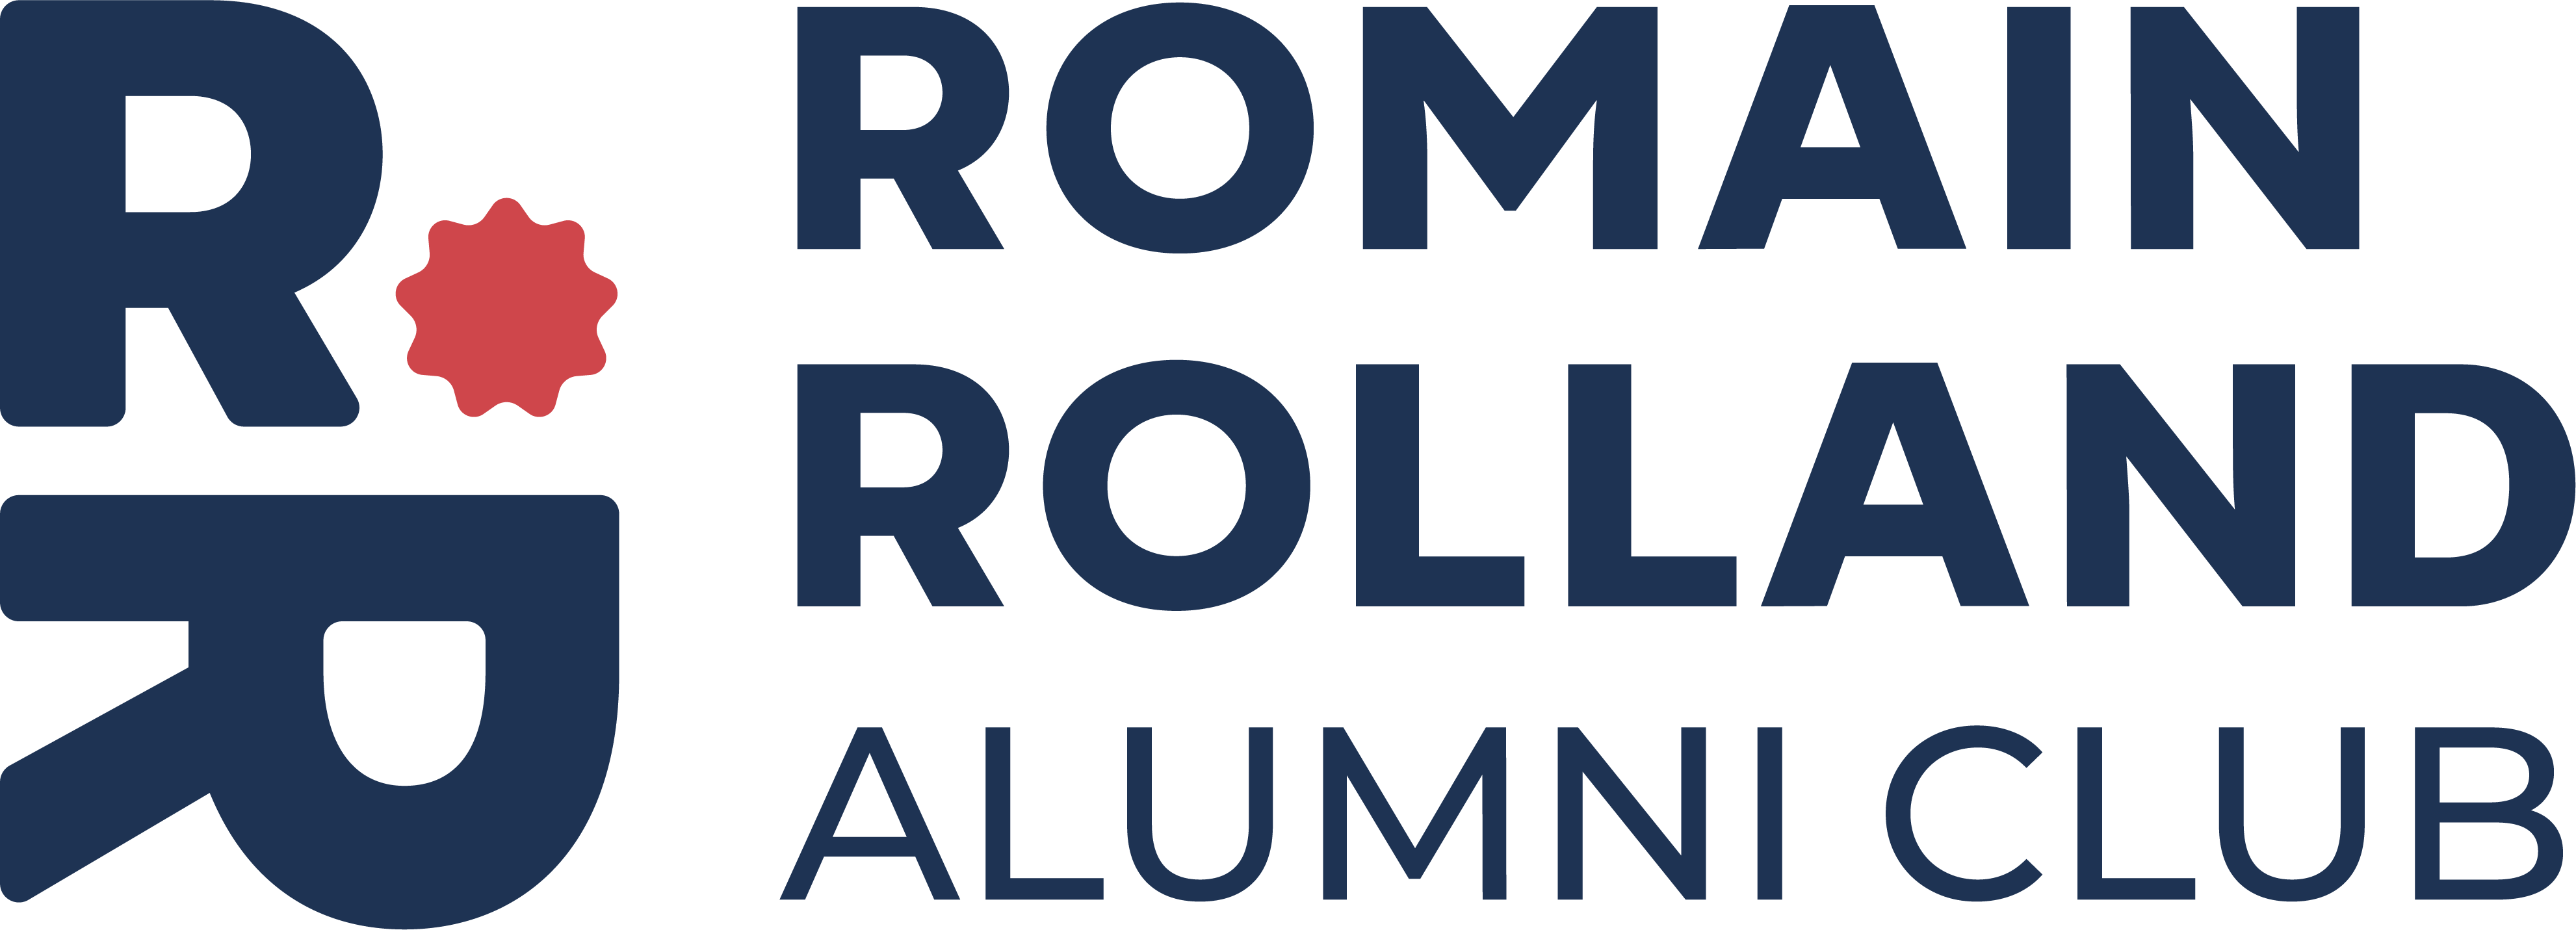 Romain Rolland Alumni Club